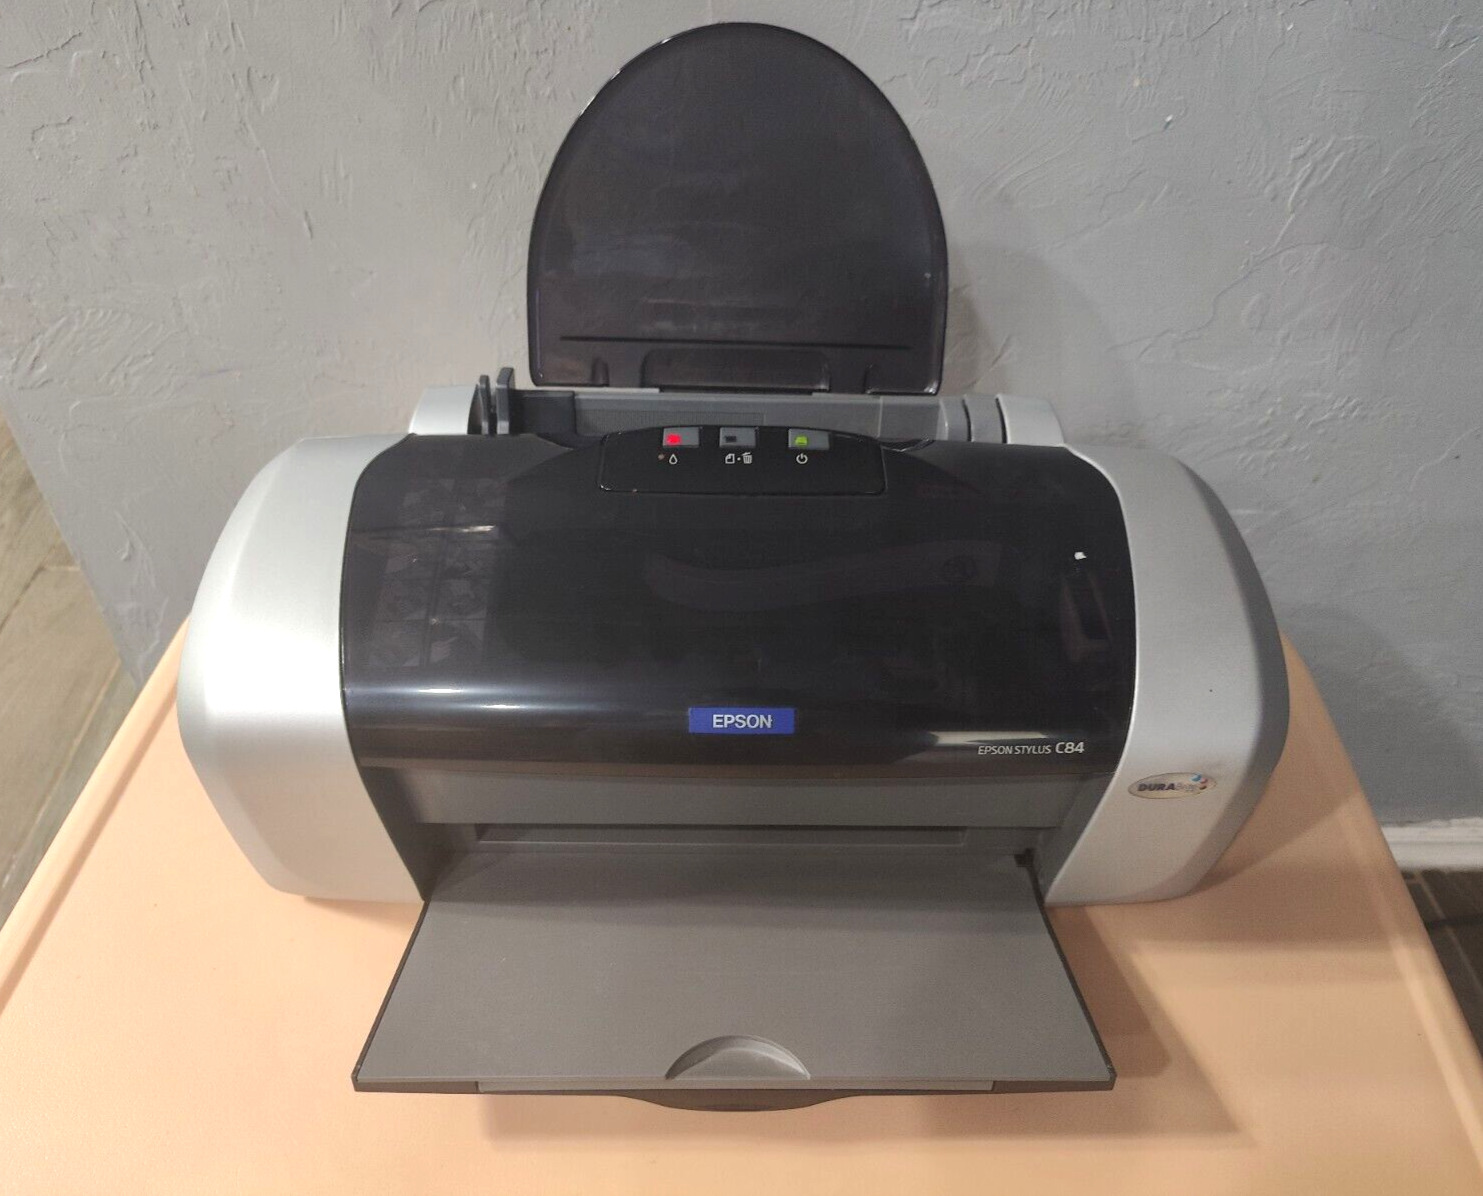 Epson Stylus C84 Standard Inkjet Printer Used, With Ink